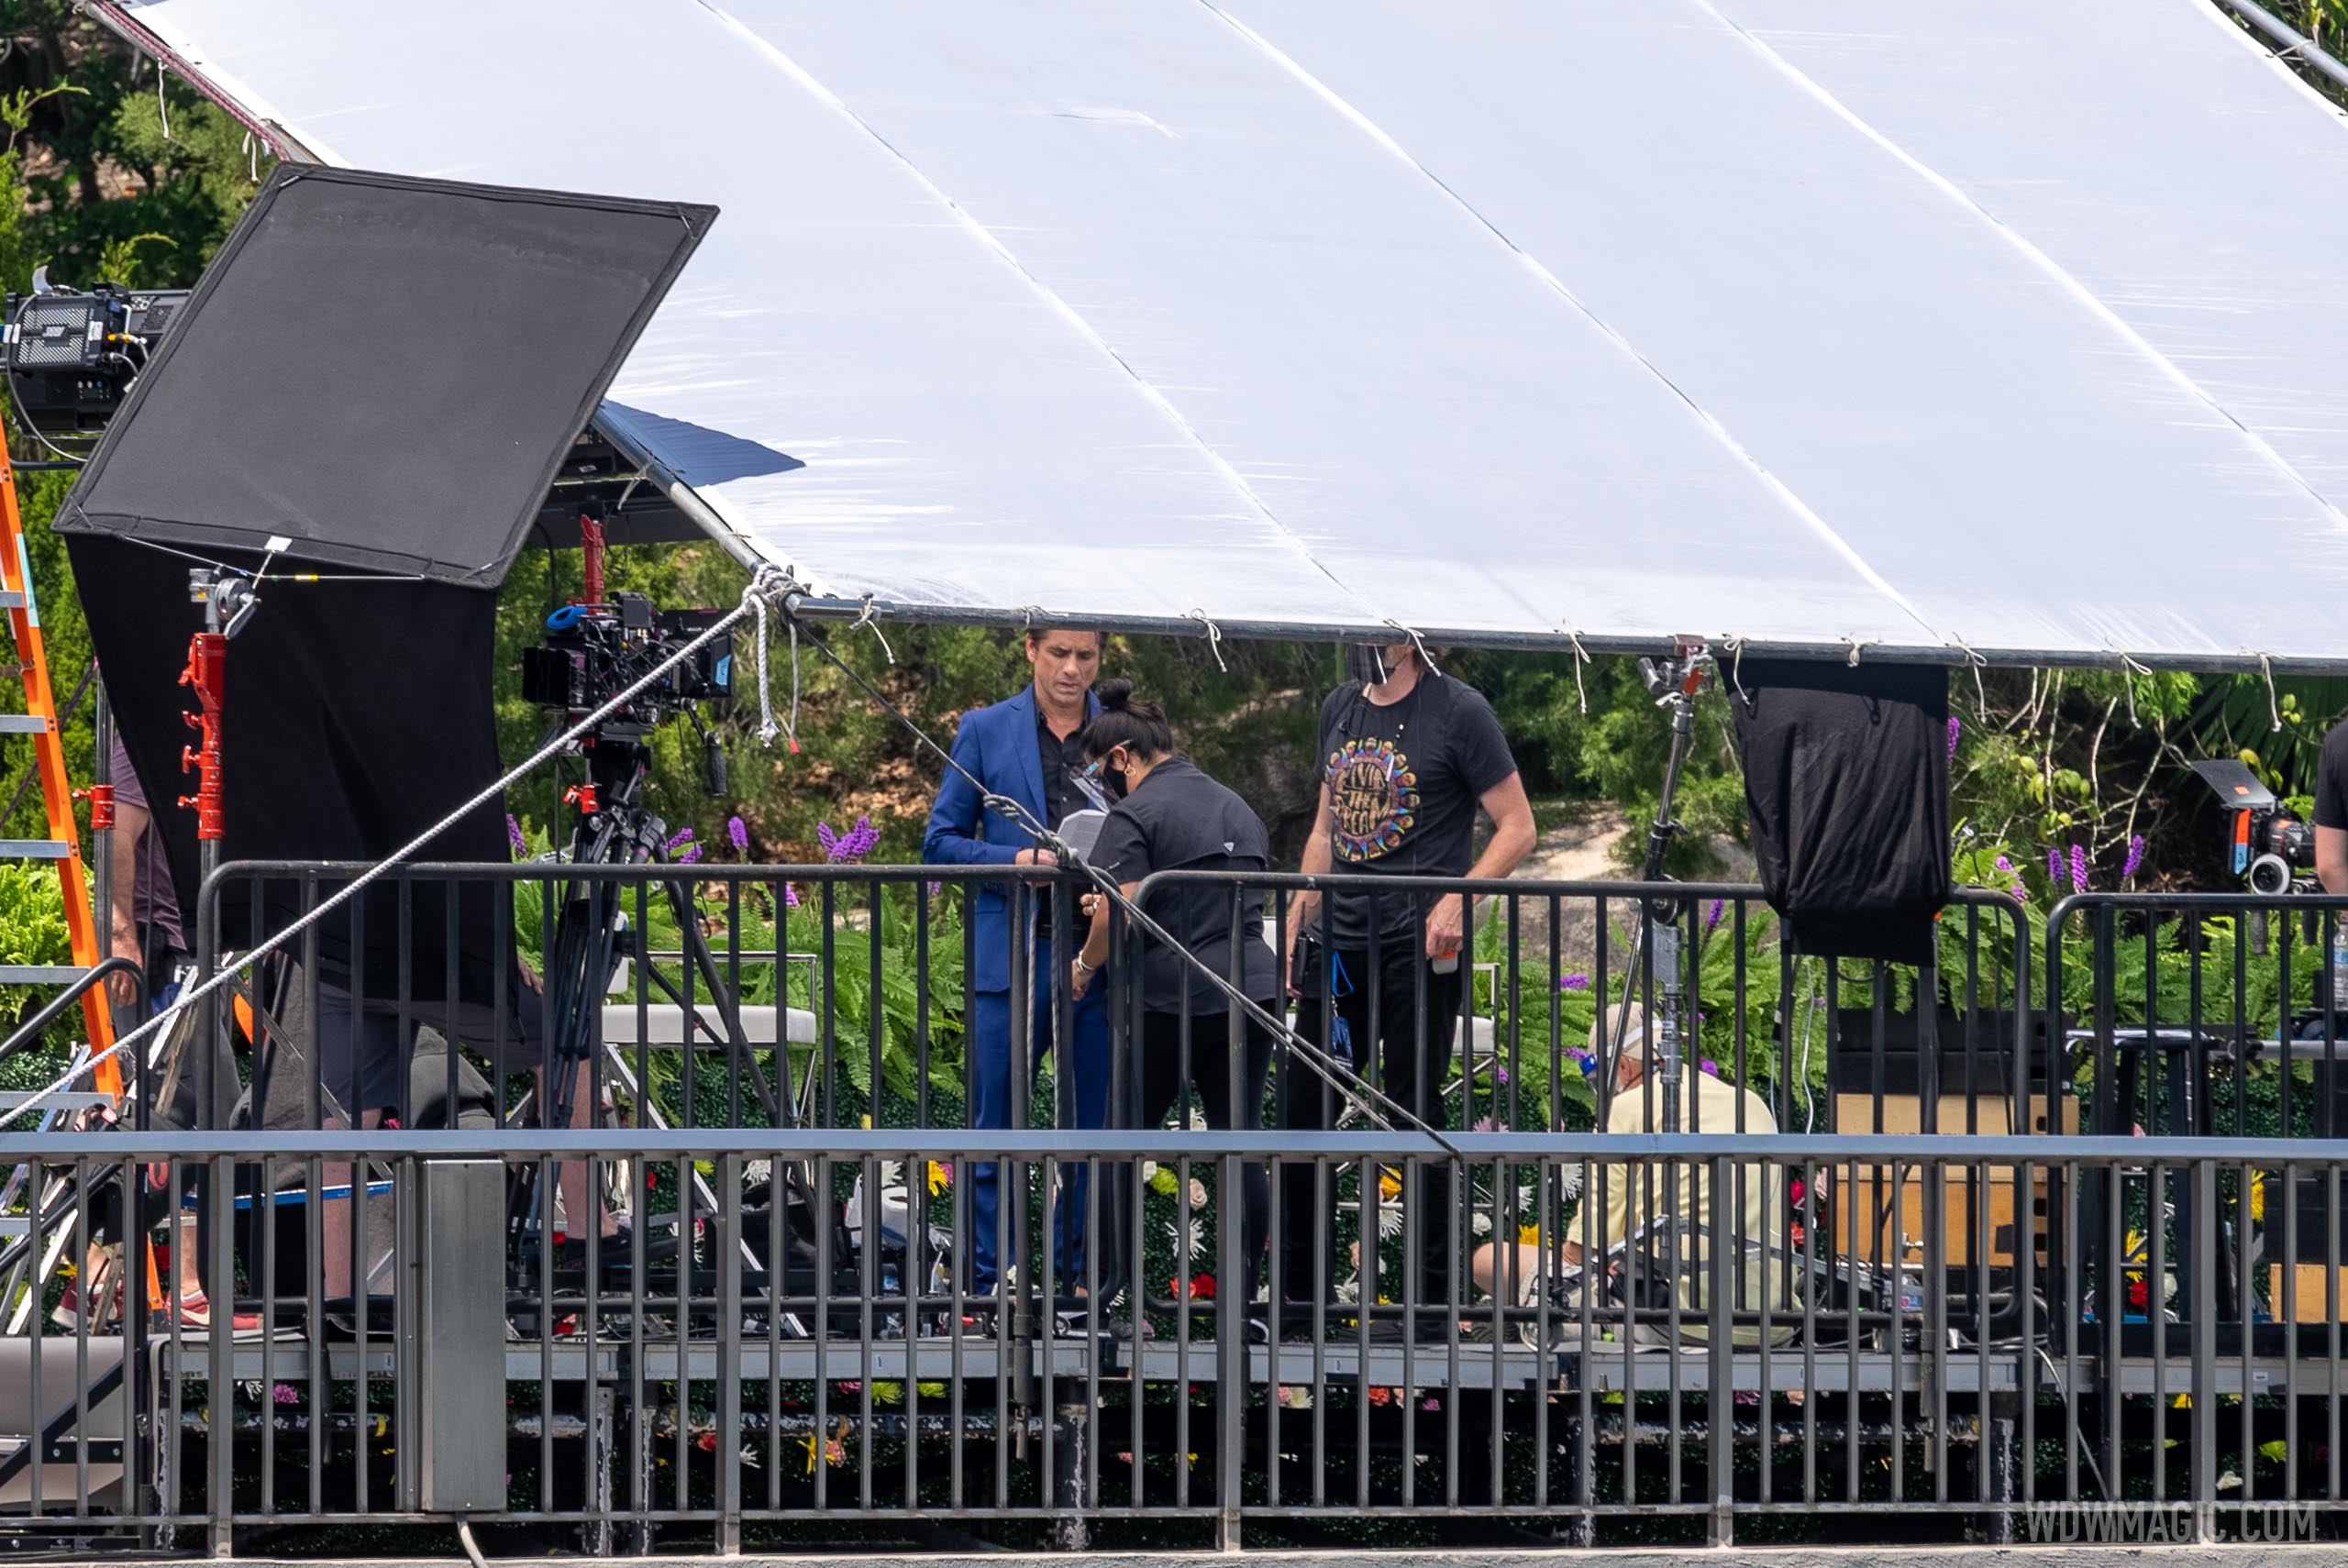 John Stamos filming for American Idol